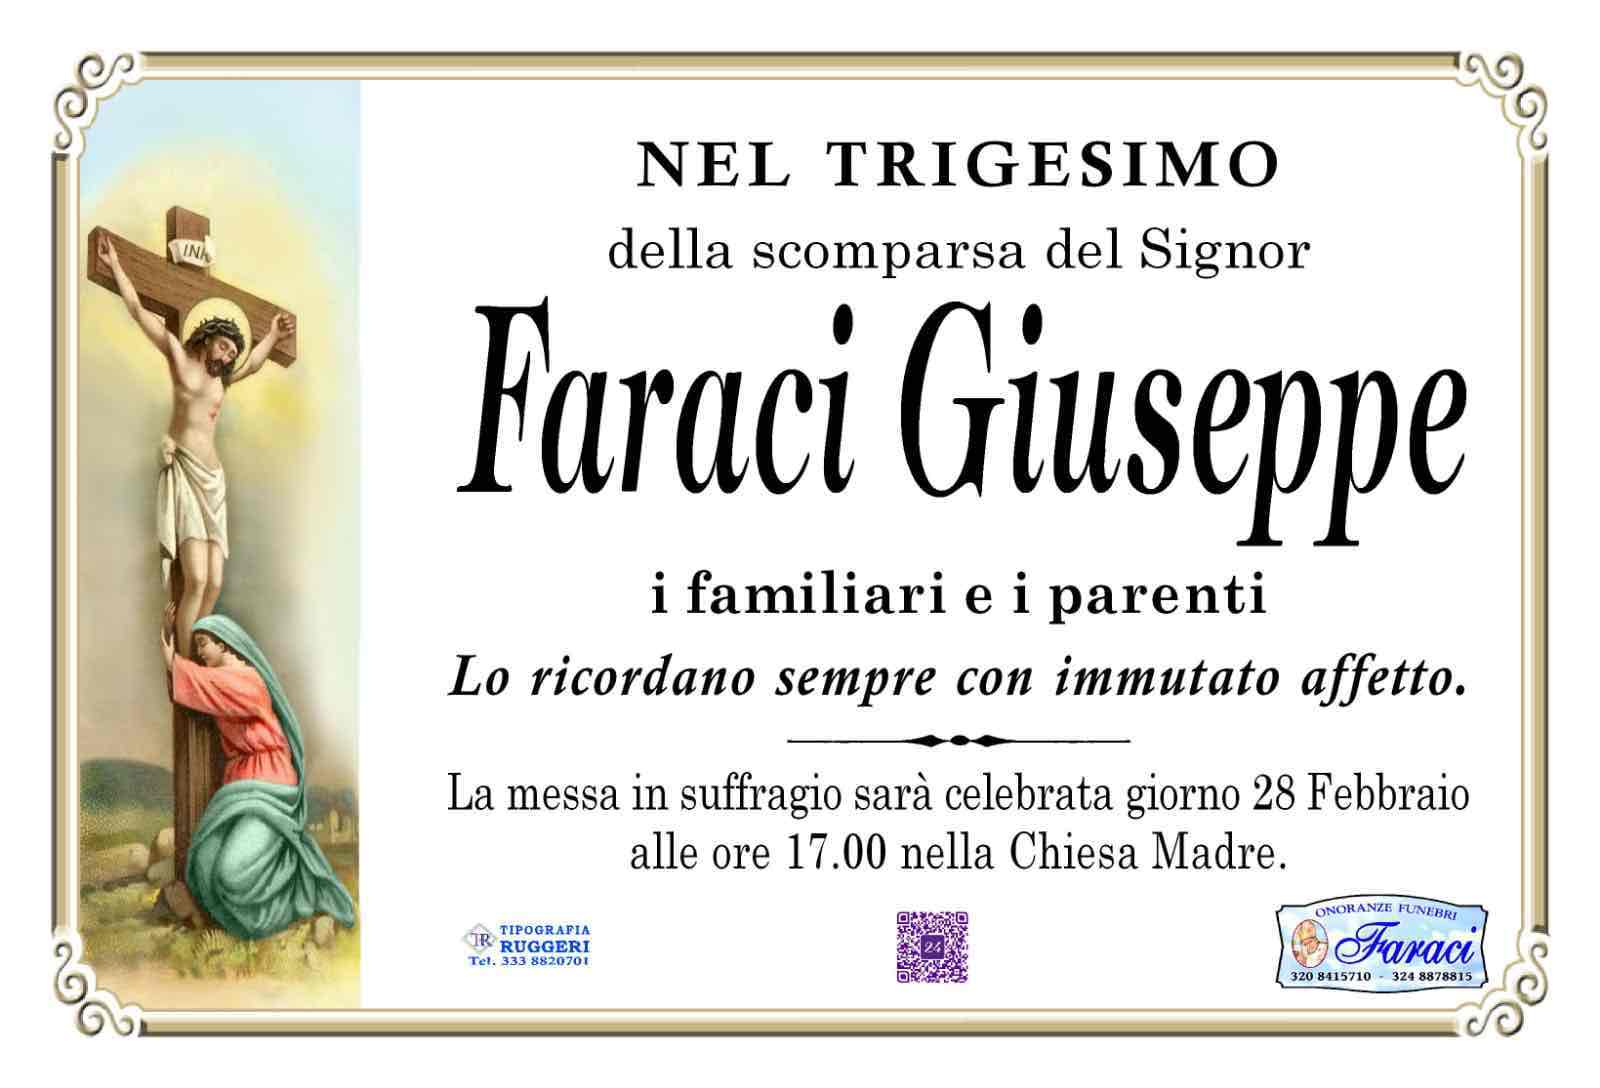 Giuseppe Faraci